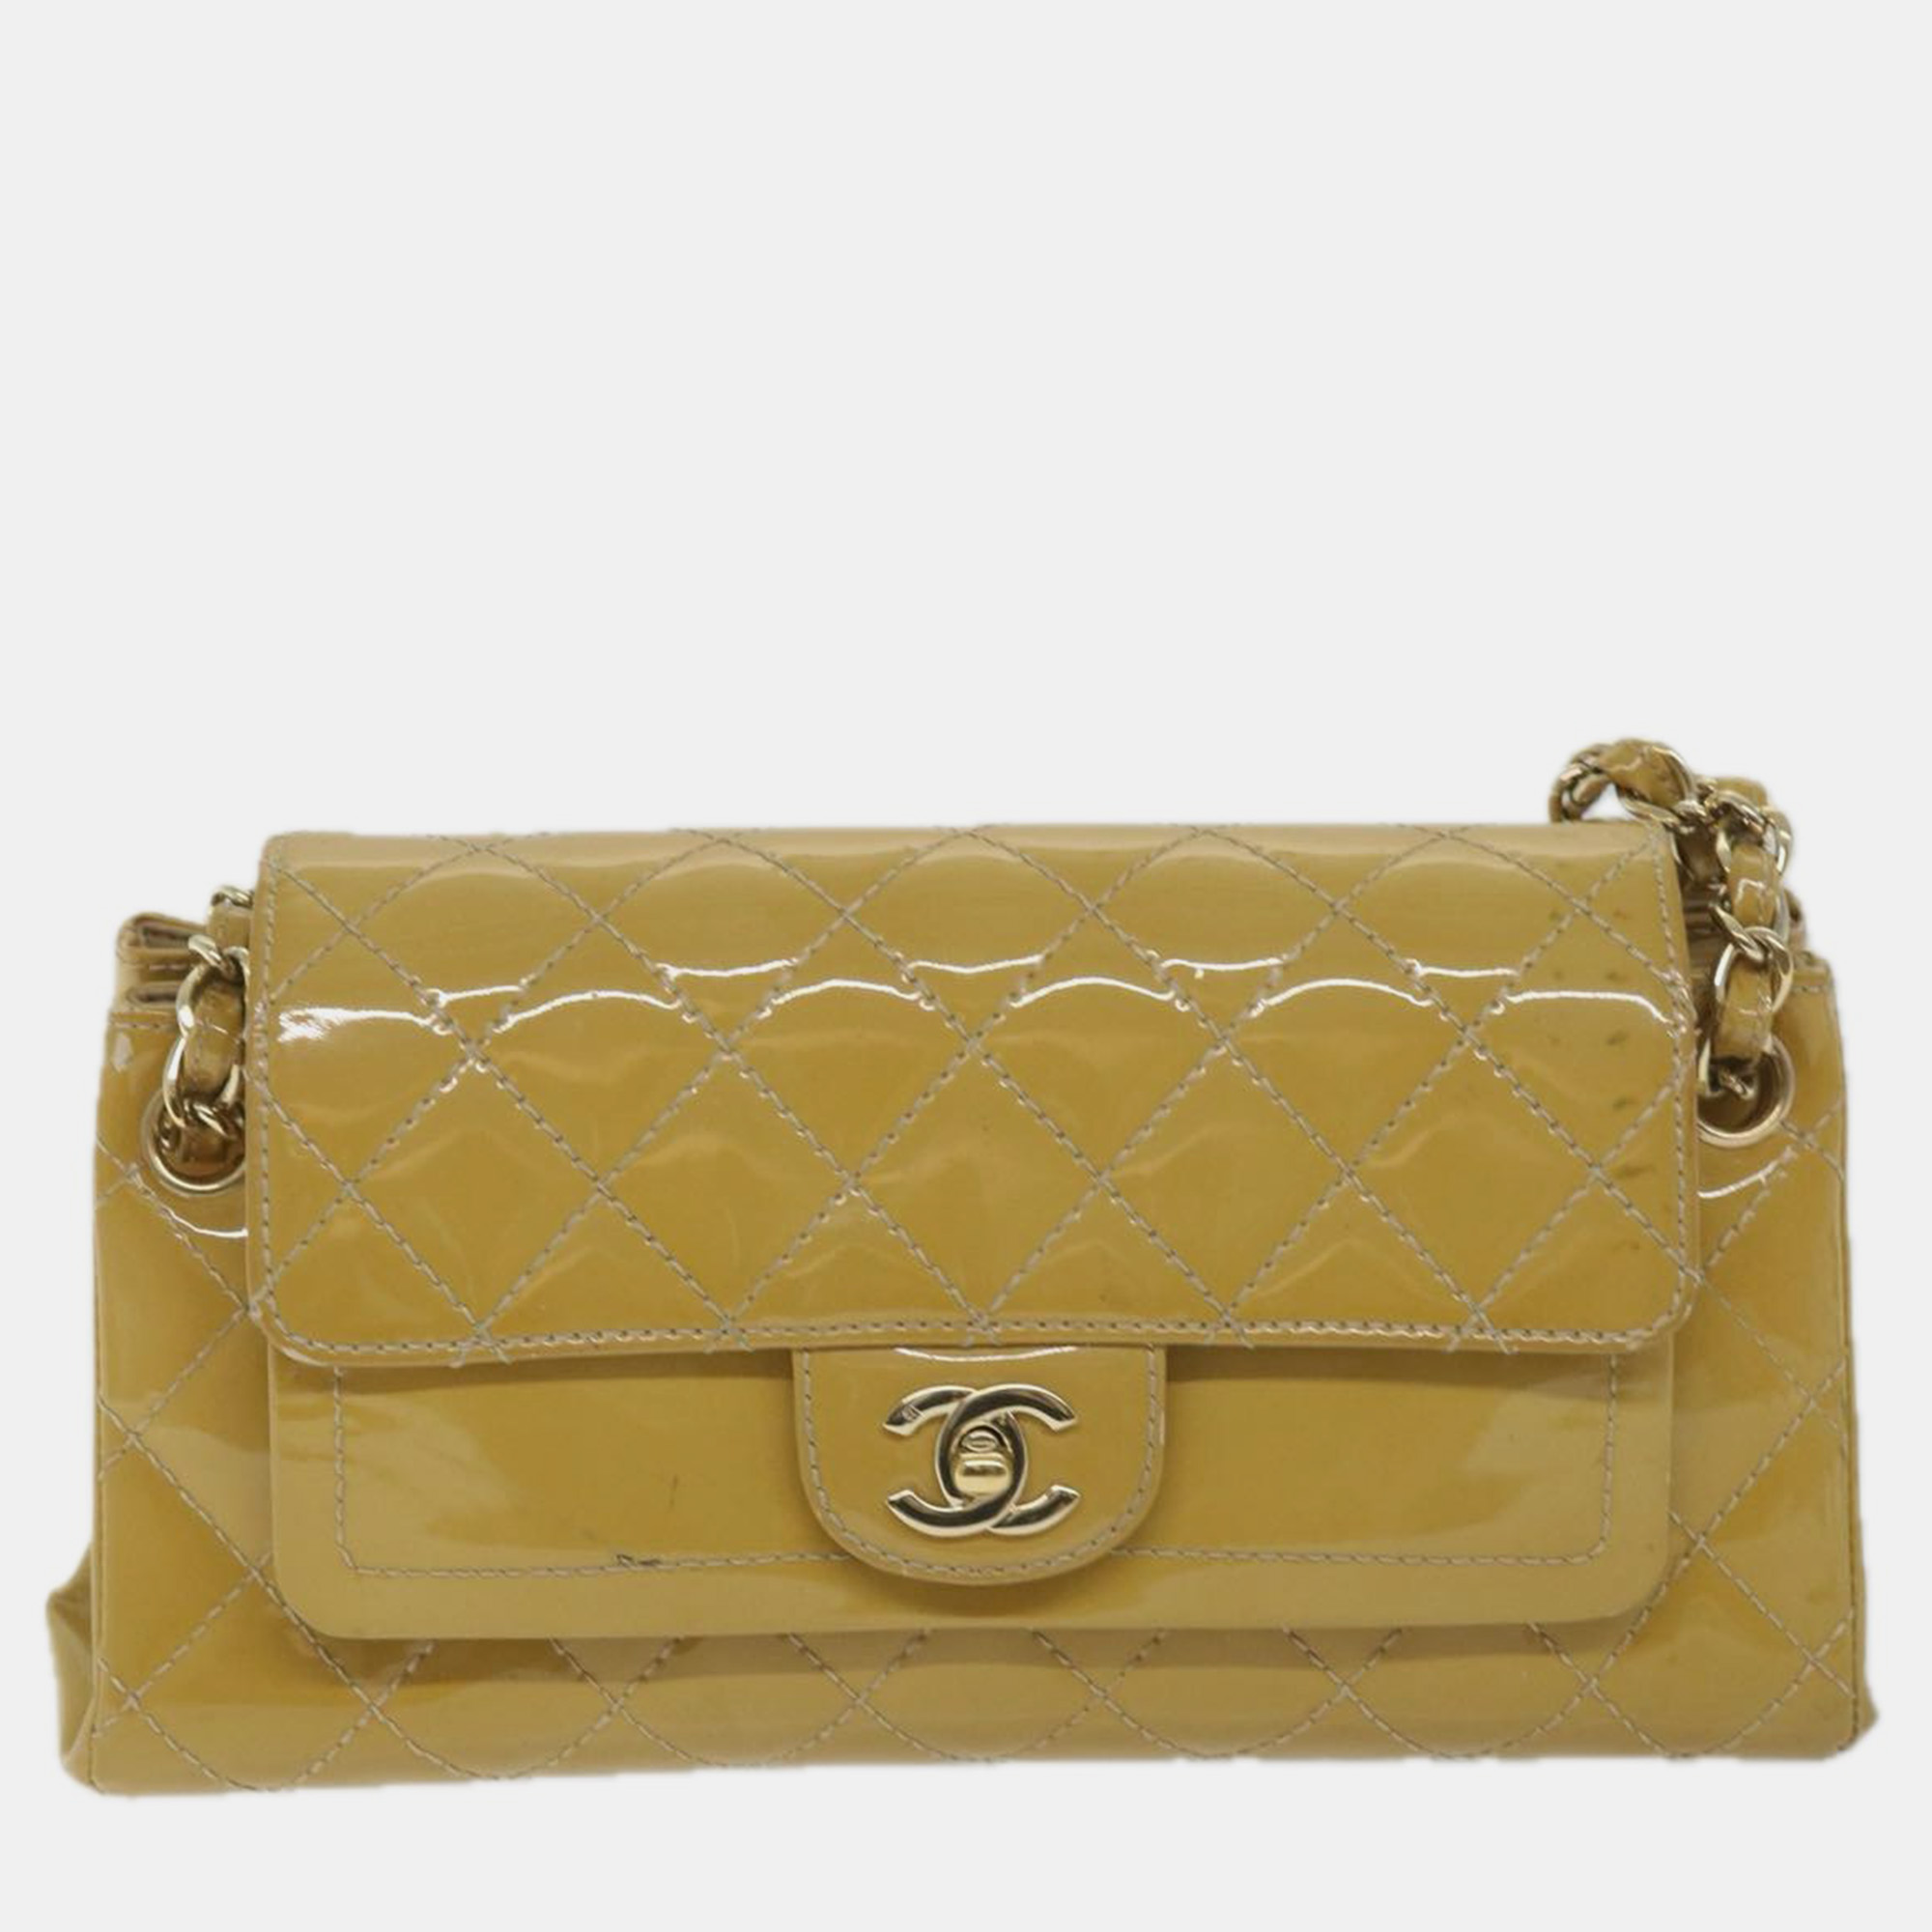 Chanel yellow patent leather matelasse shoulder bag